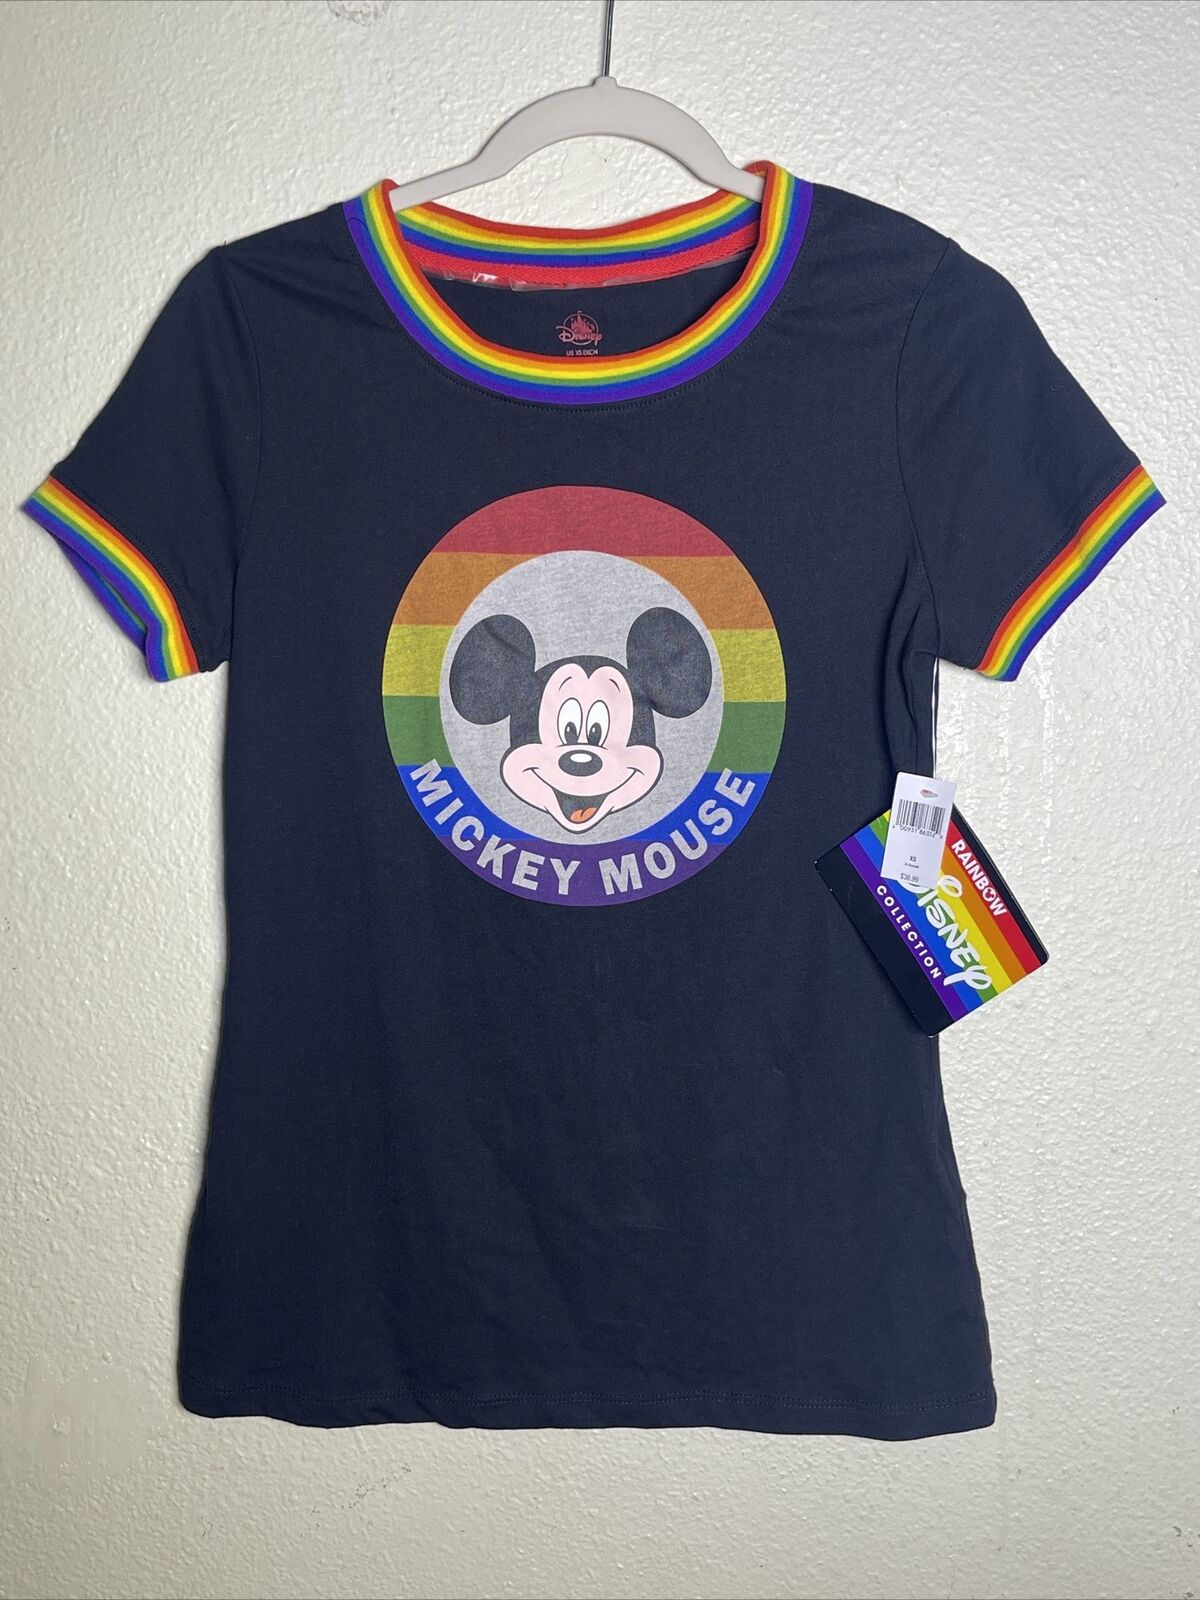 Rainbow Disney Pride Mickey Mouse Shirt NWT SIZE XS